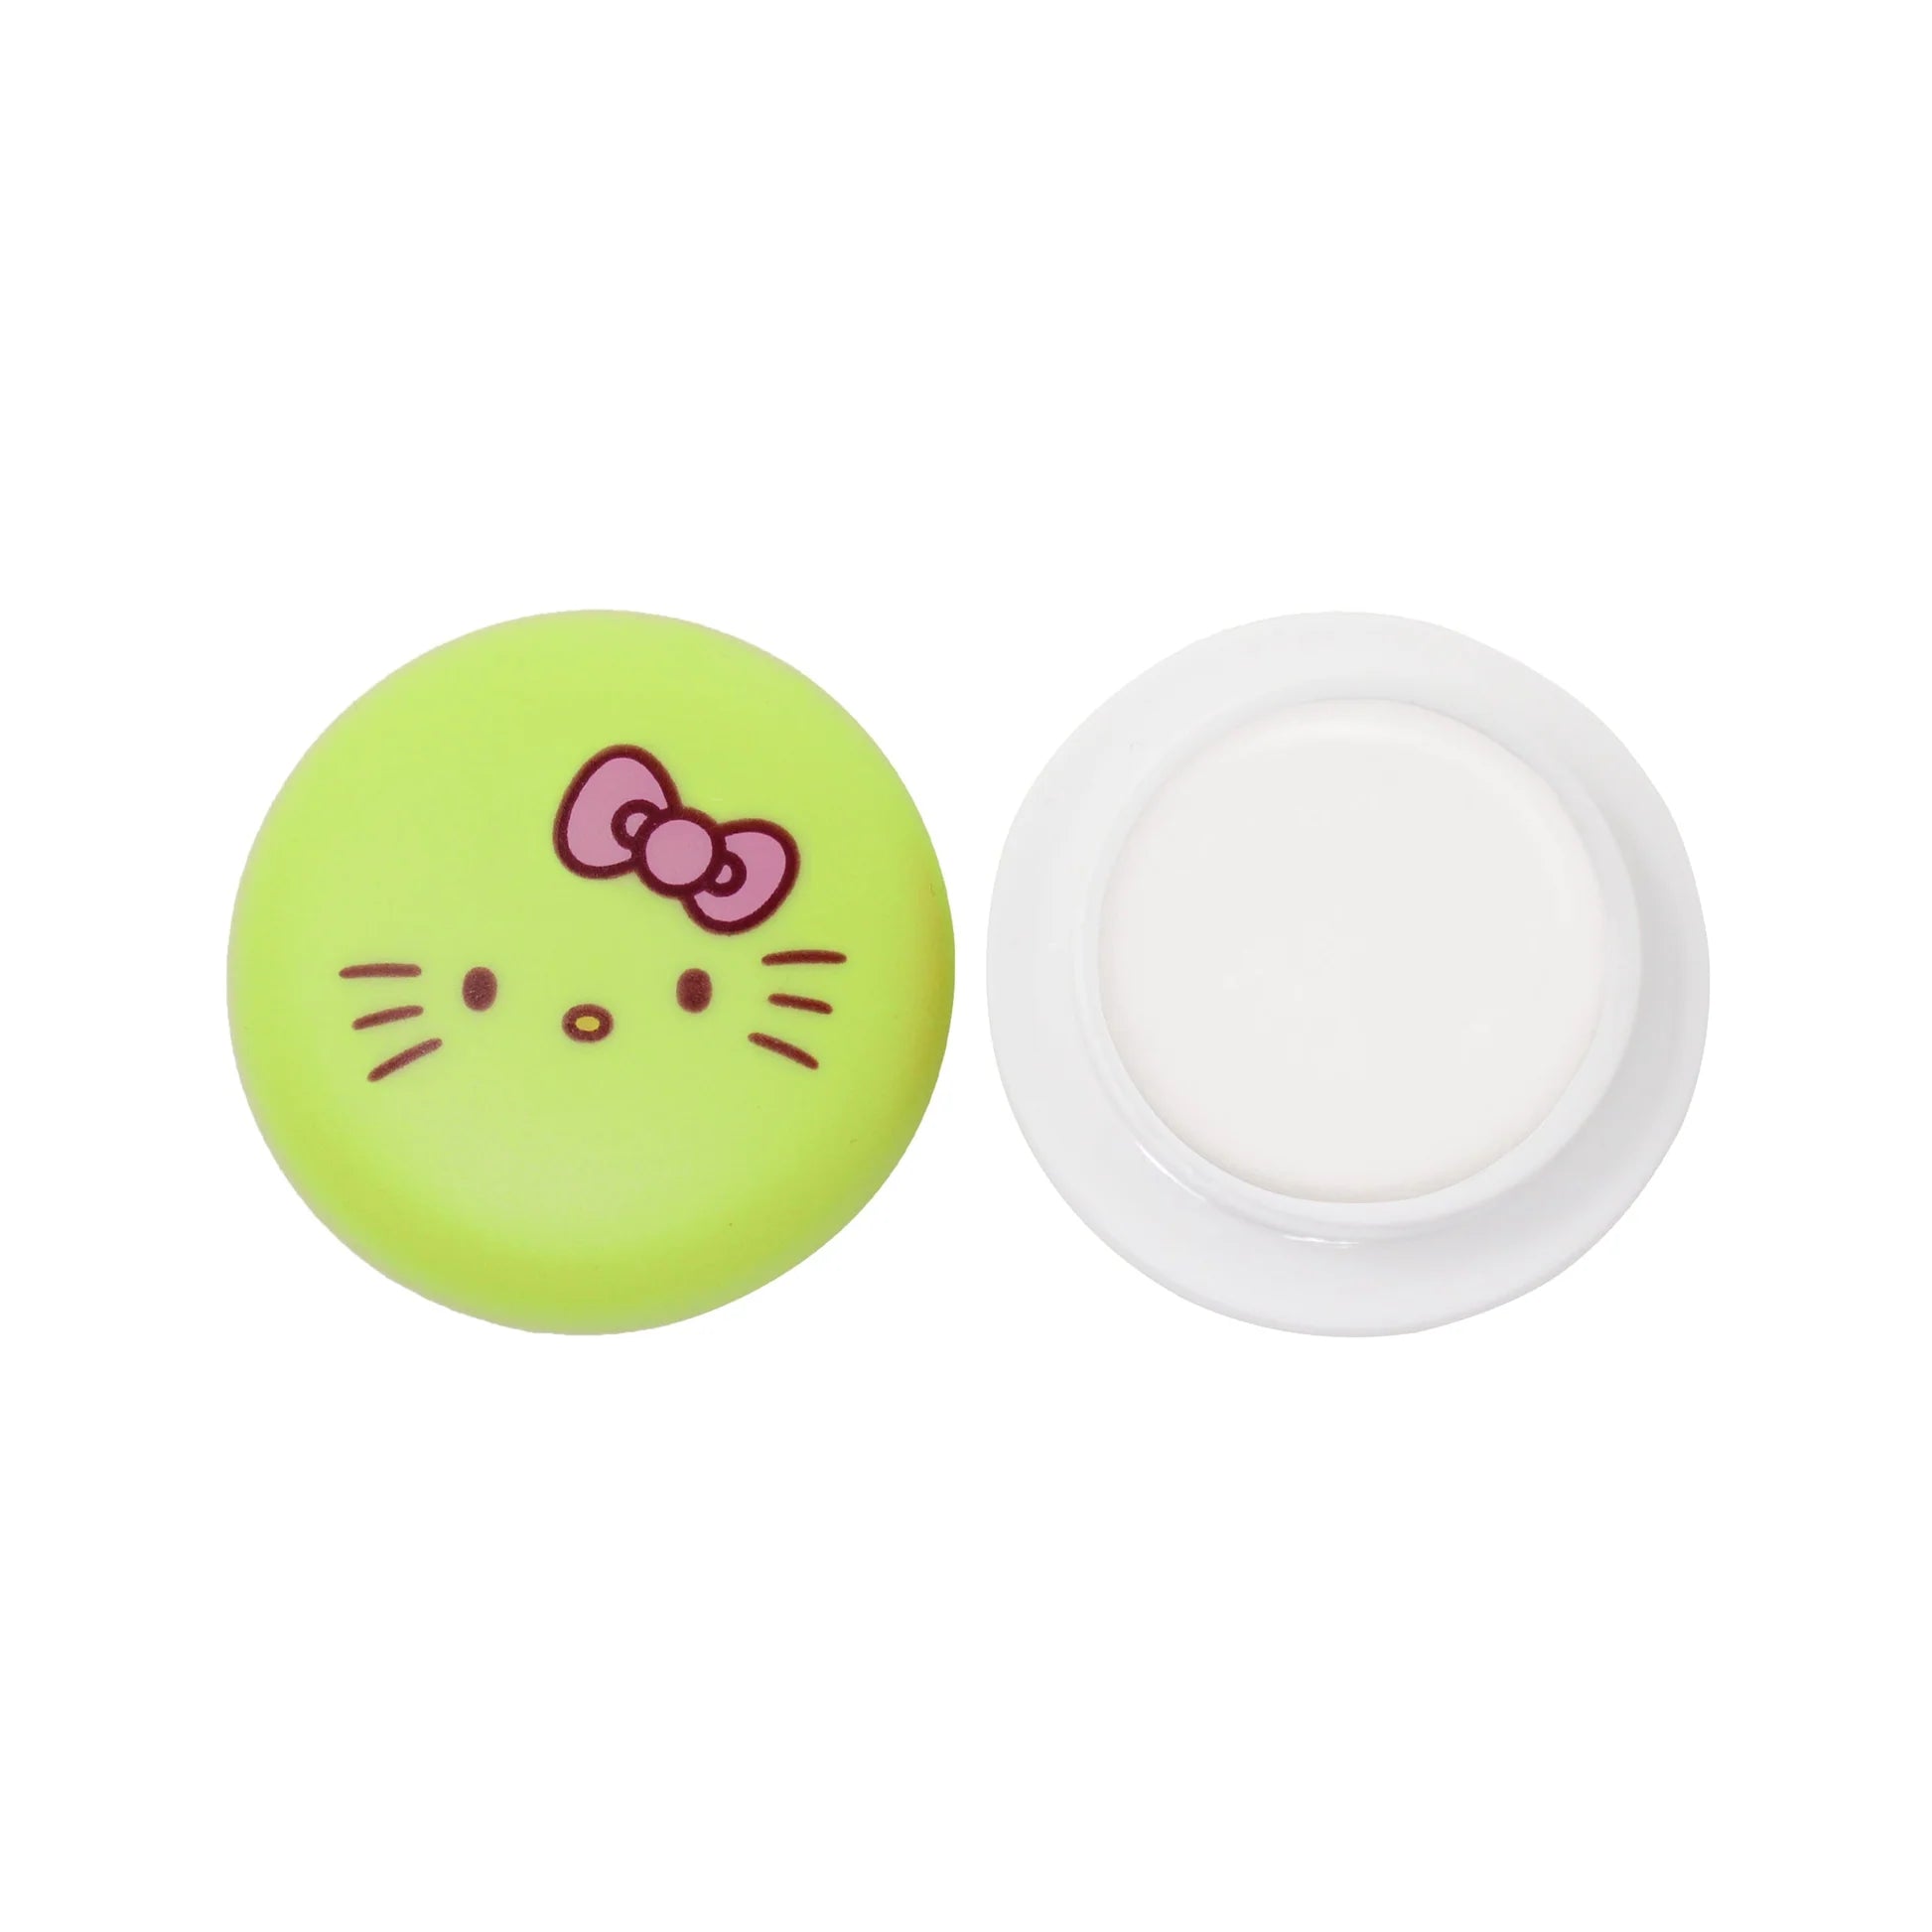 The Creme Shop - Hello Kitty Macaron Lip Balm Juicy Pear